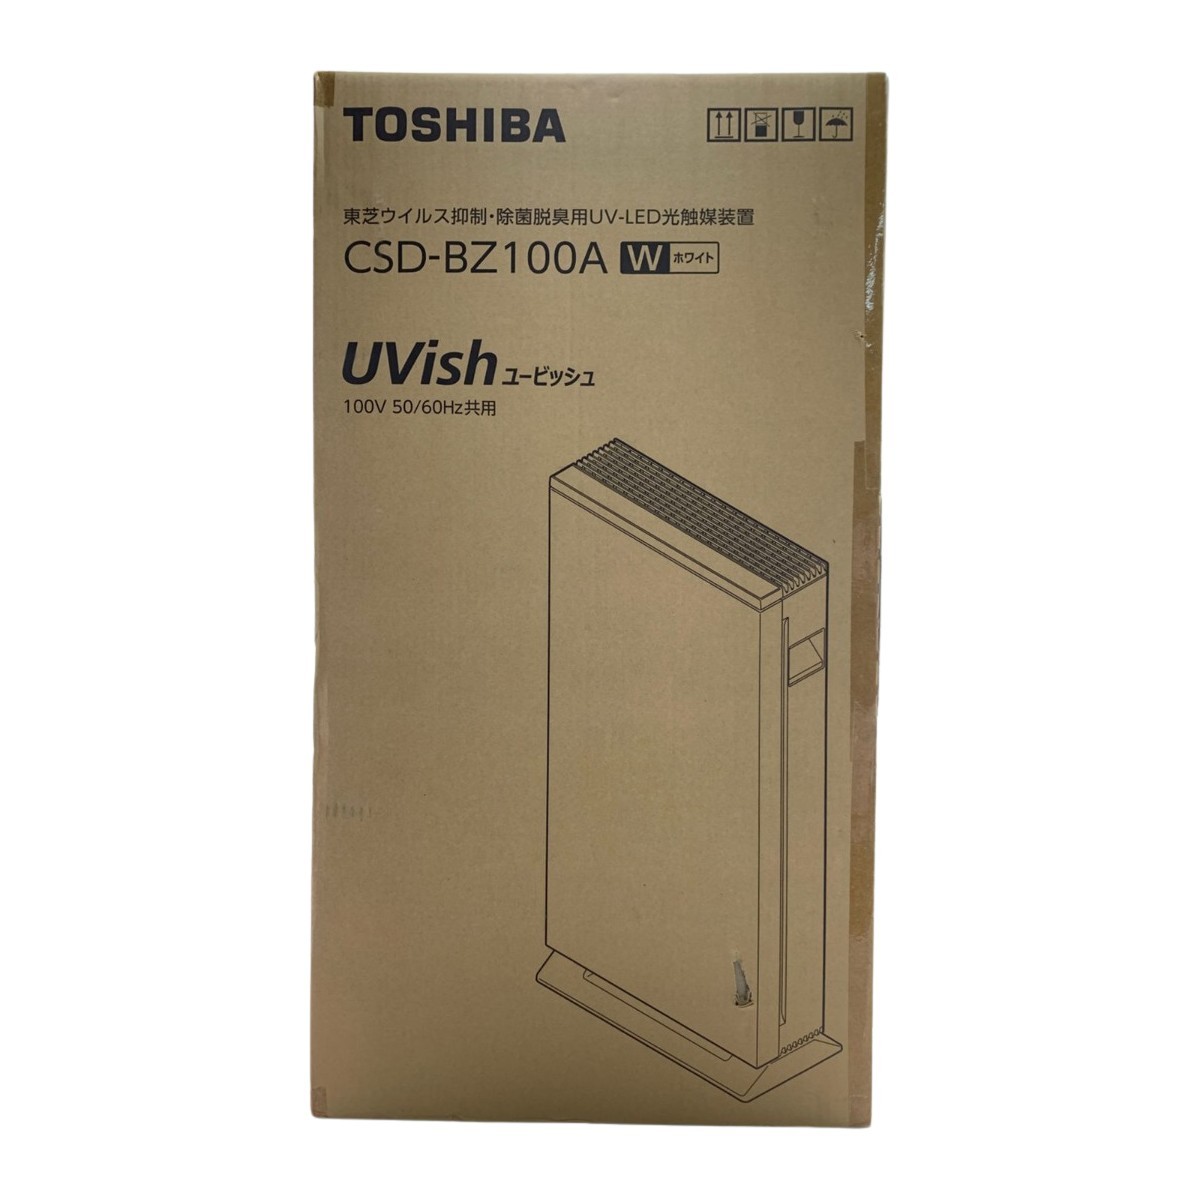 vv TOSHIBA Toshiba UVishu il s suppression * bacteria elimination . smell for UV-LED photocatalyst equipment CSD-BZ100A unused . close 